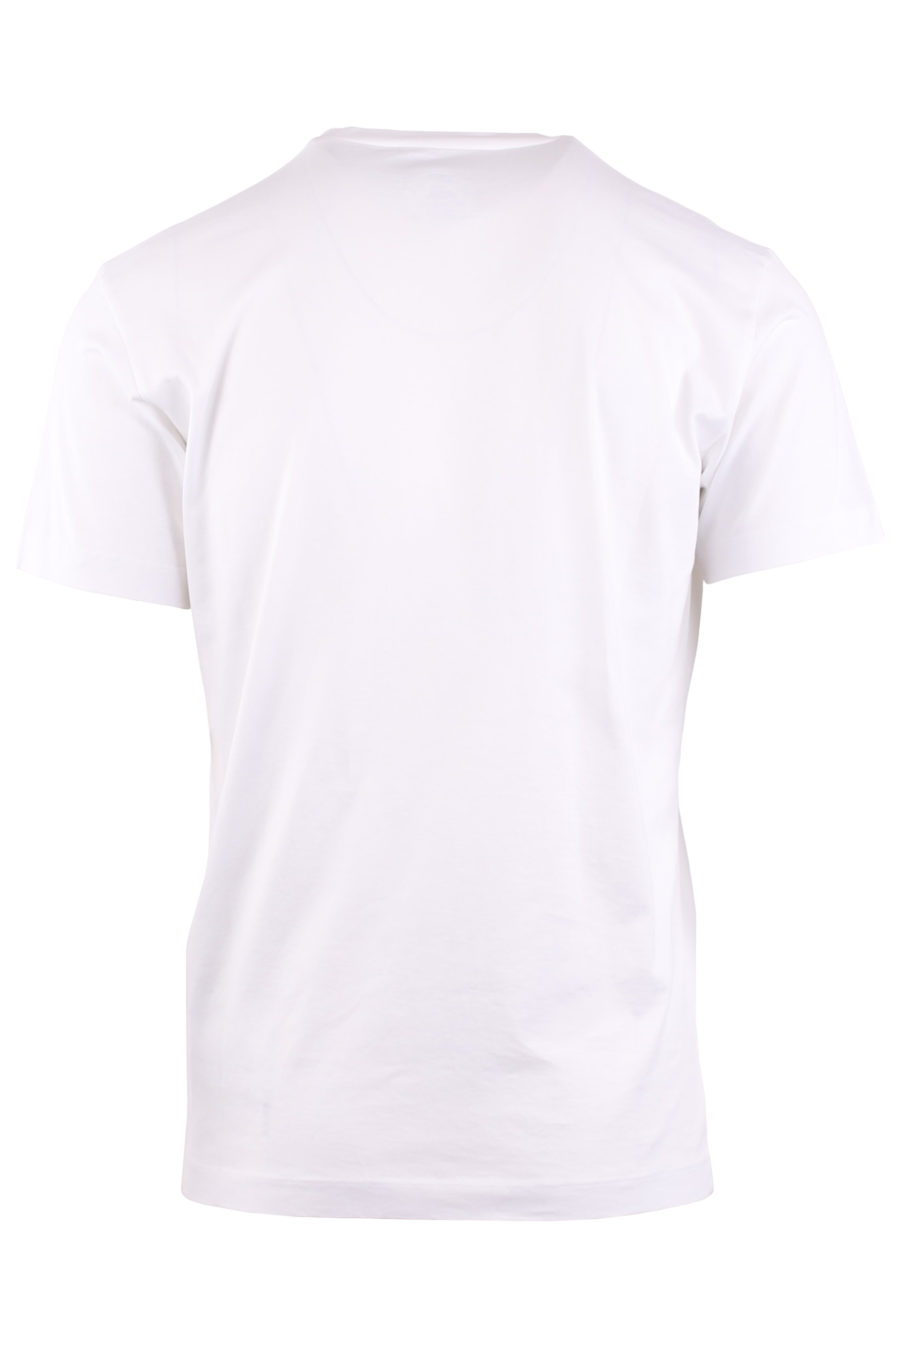 Camiseta blanca con logotipo "Milano" - 2f154d7d6320c01647329b350f1954c486453104